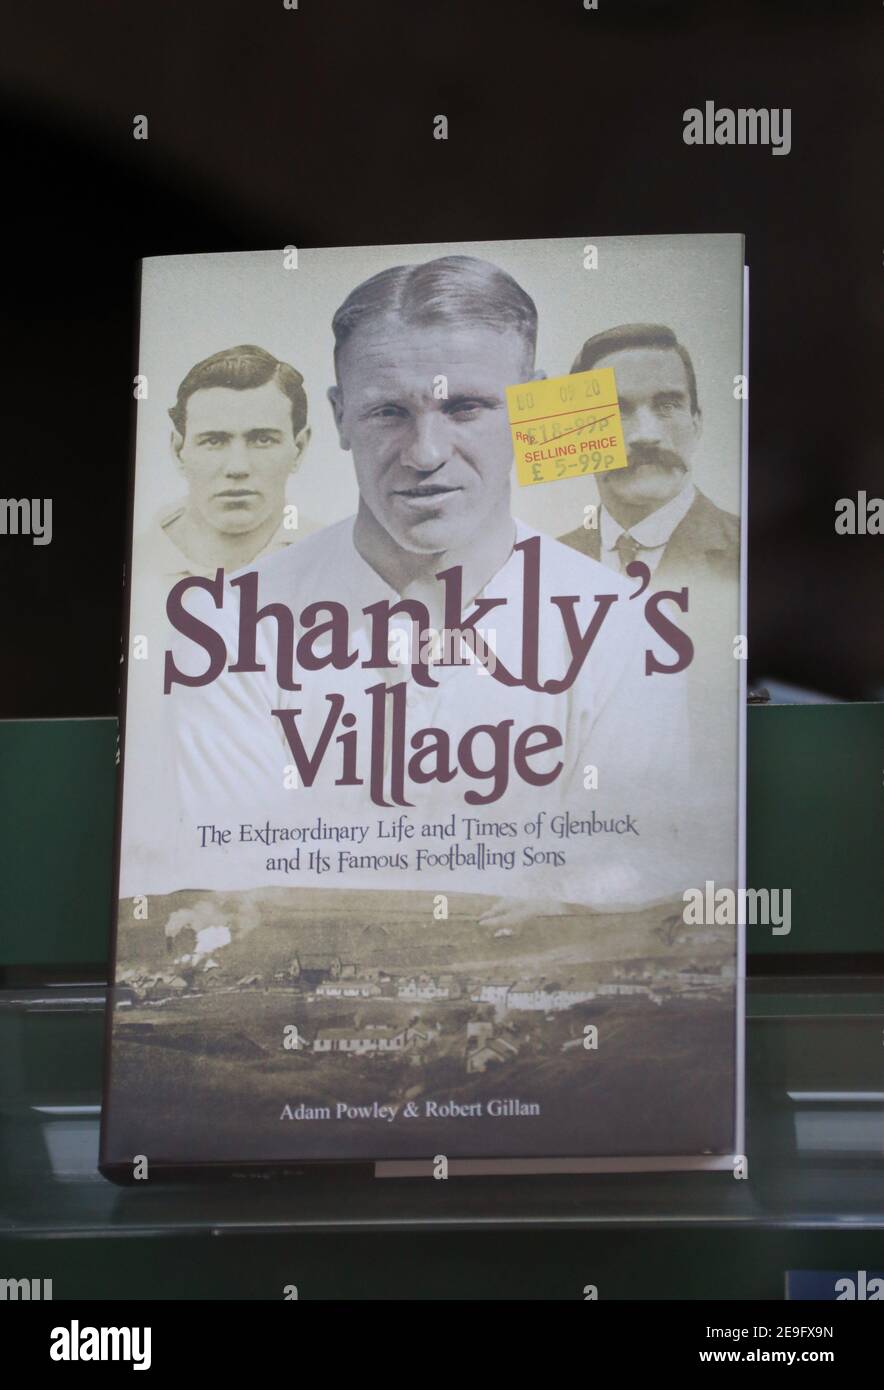 Shanklys Village in a bookshop window Stock Photo